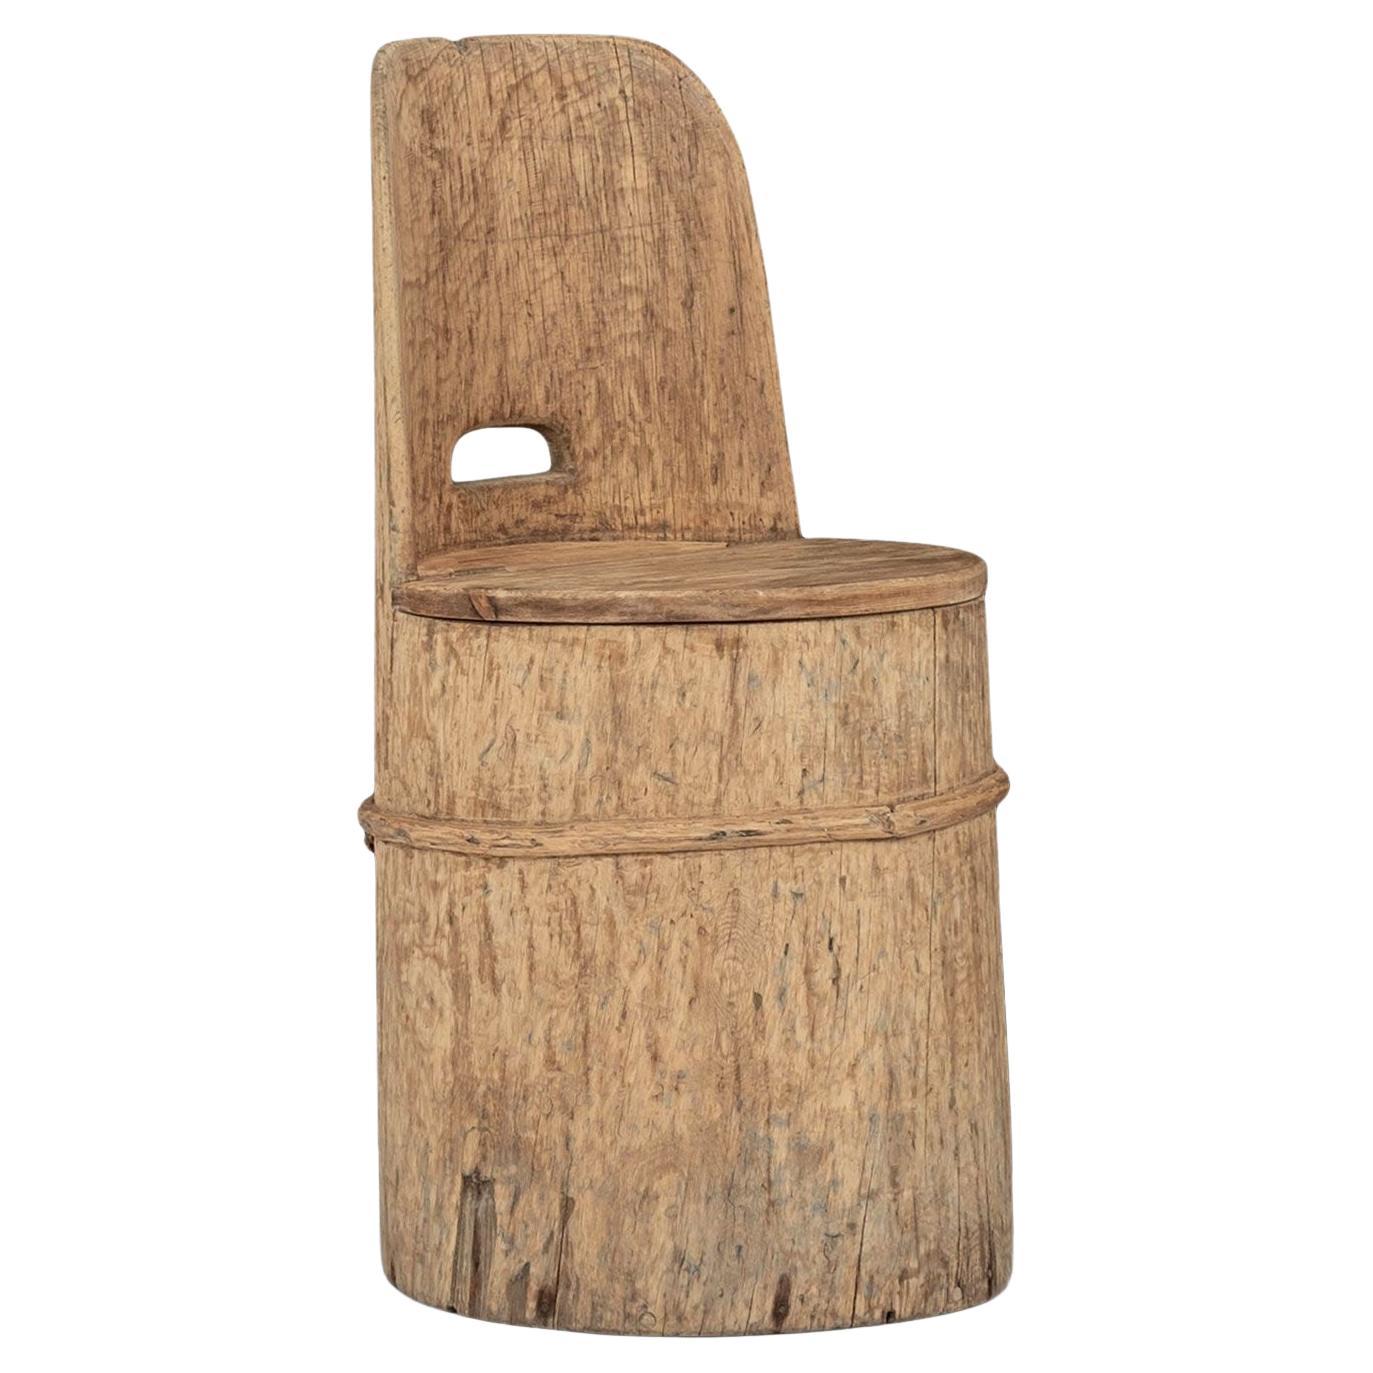 Primitive Swedish Pine Log Chair or Kubbestol